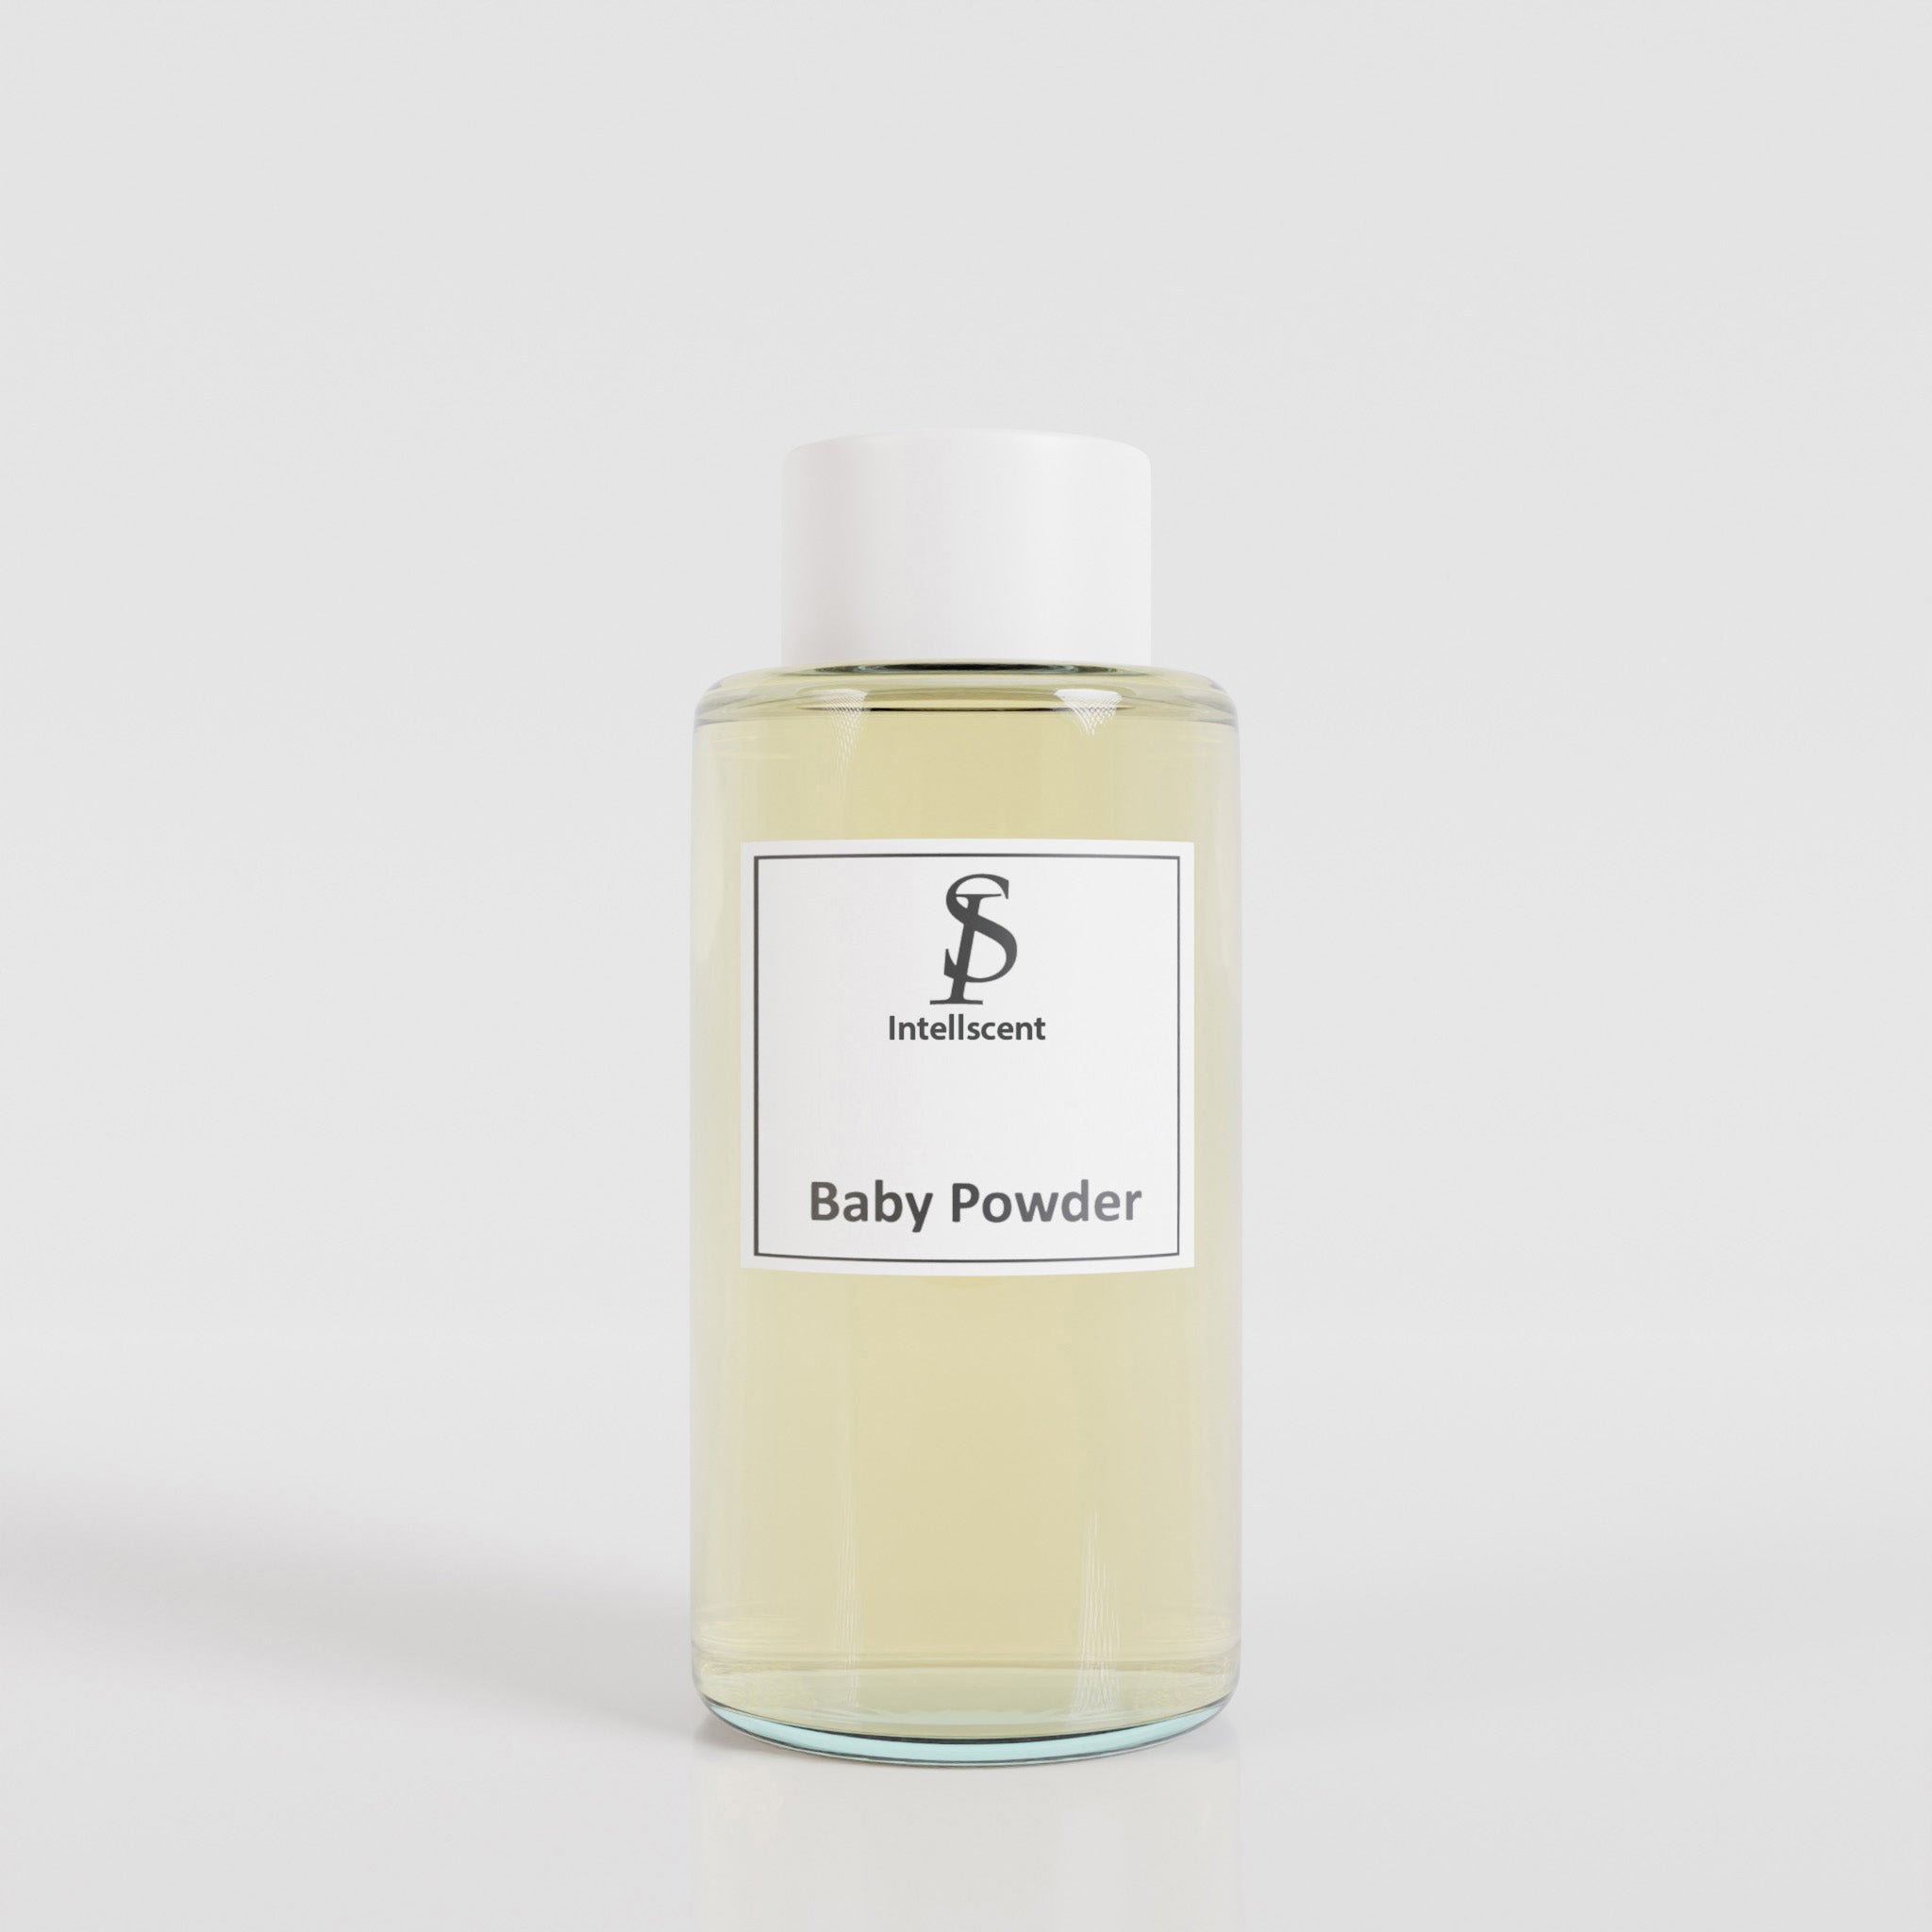 Baby Powder Oil Diffuser Refill